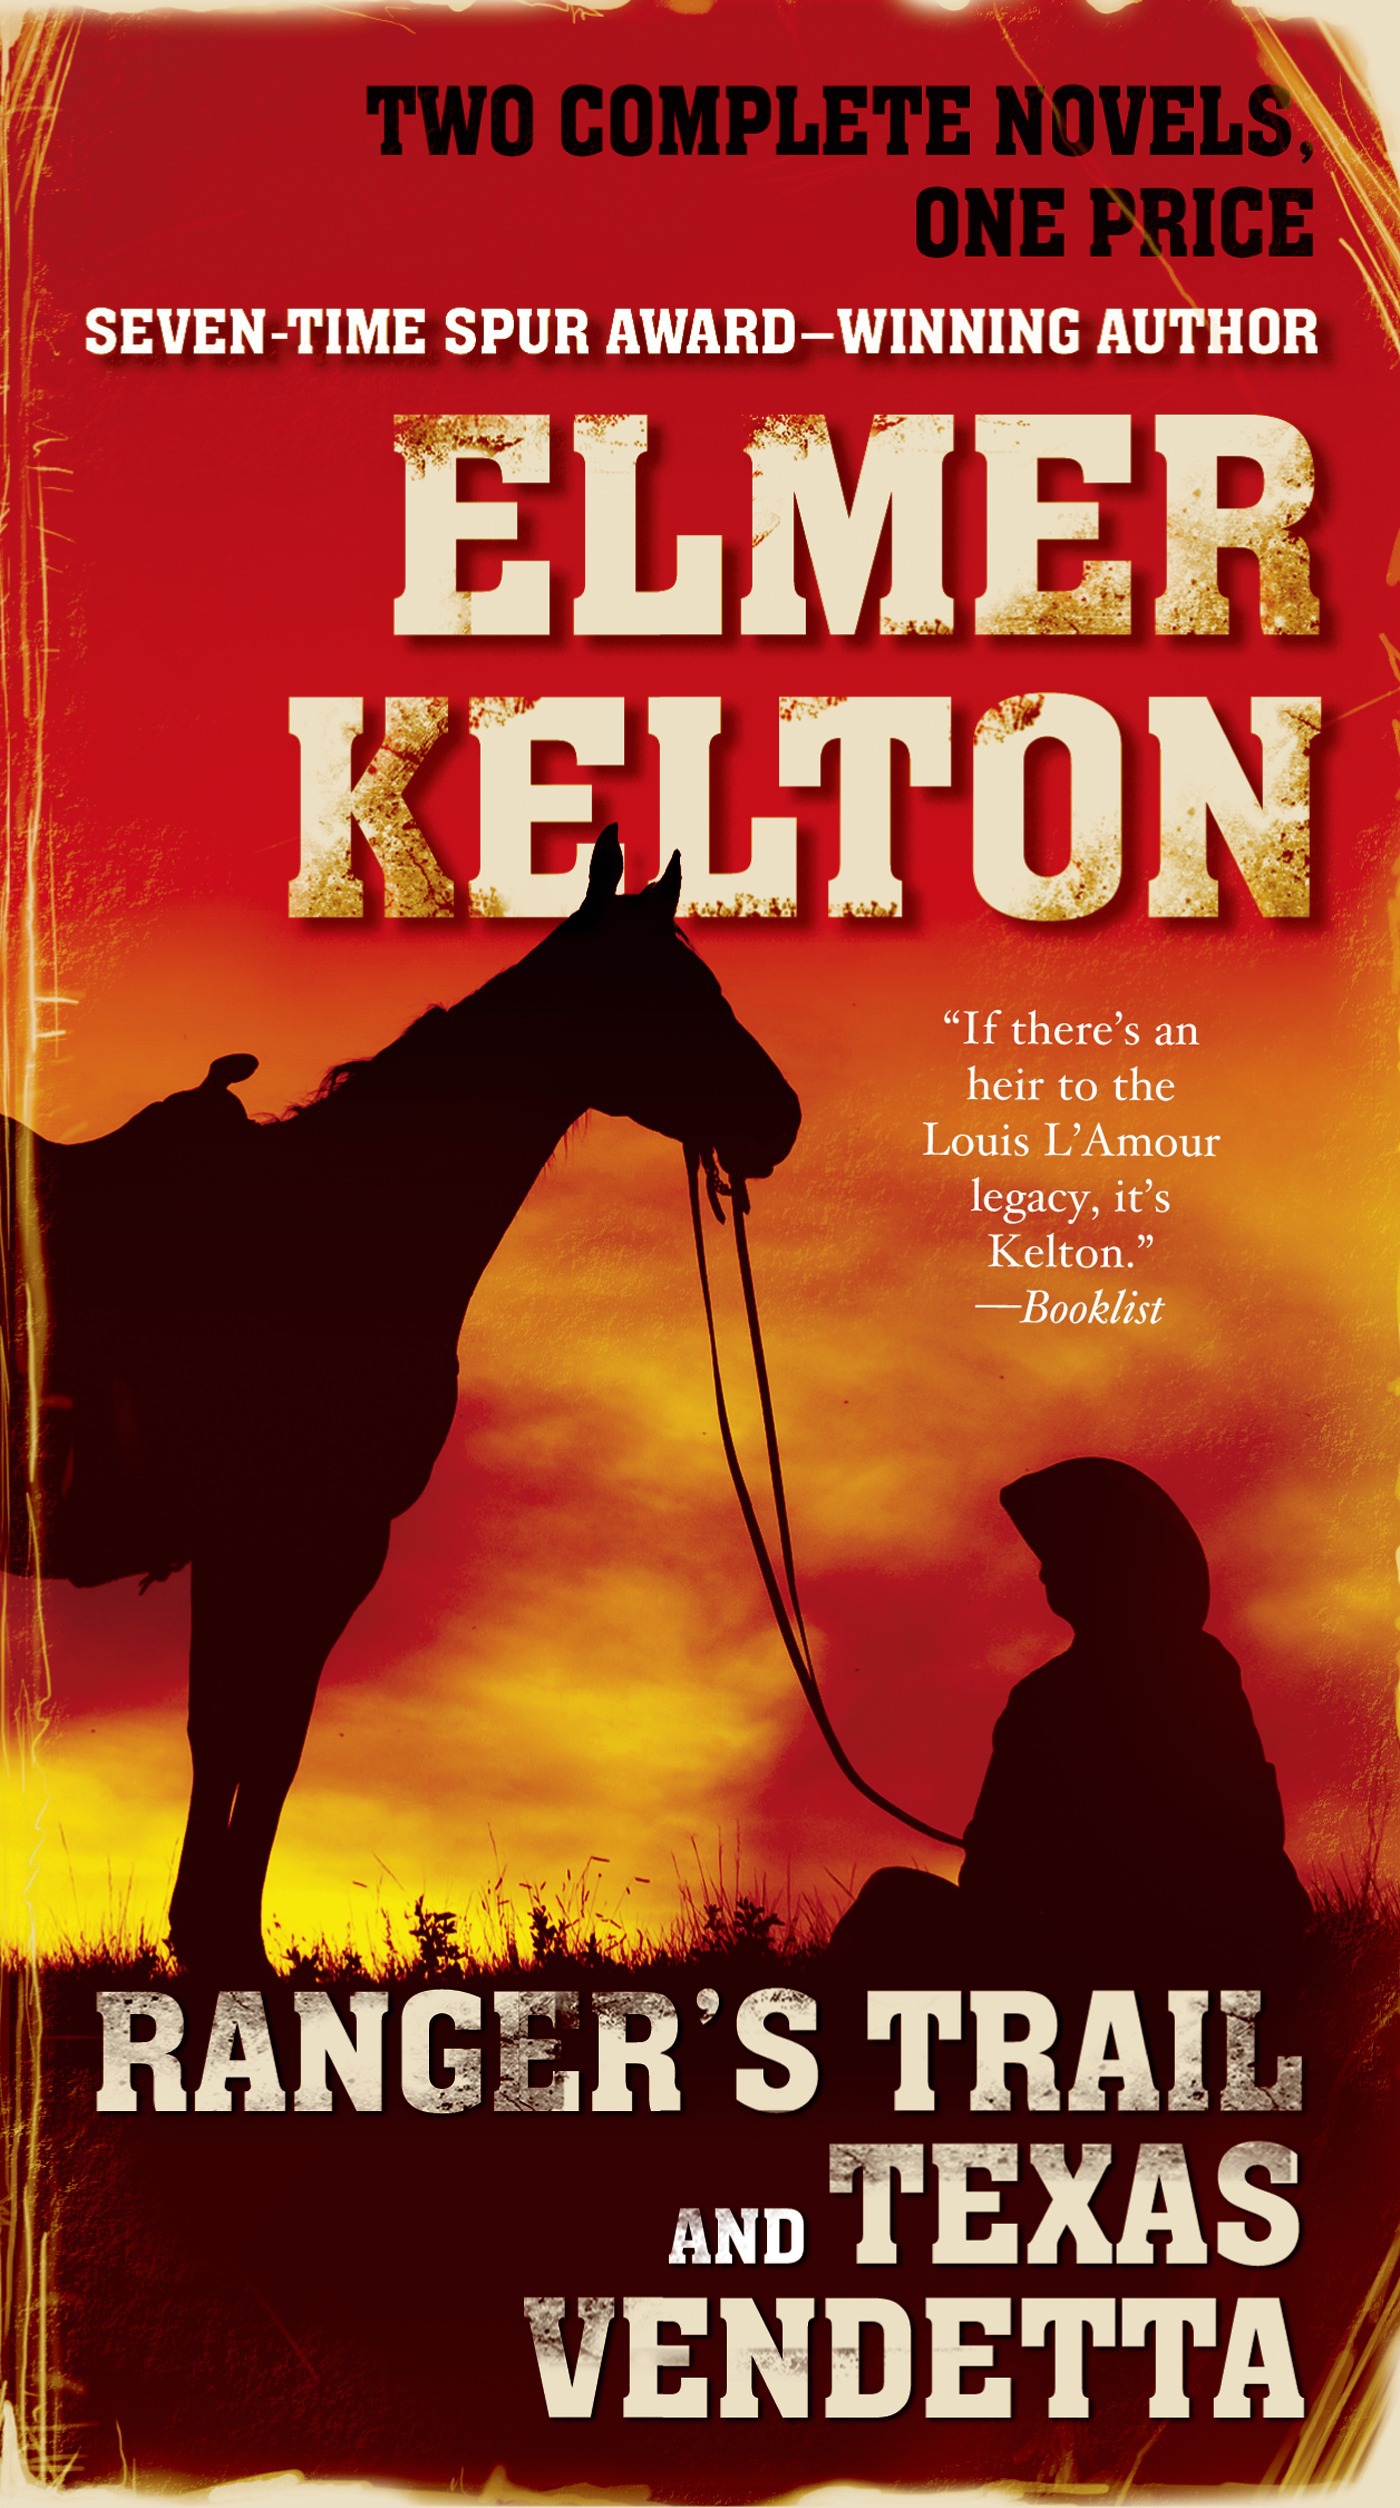 Ranger's Trail and Texas Vendetta : Two Complete Novels by Elmer Kelton